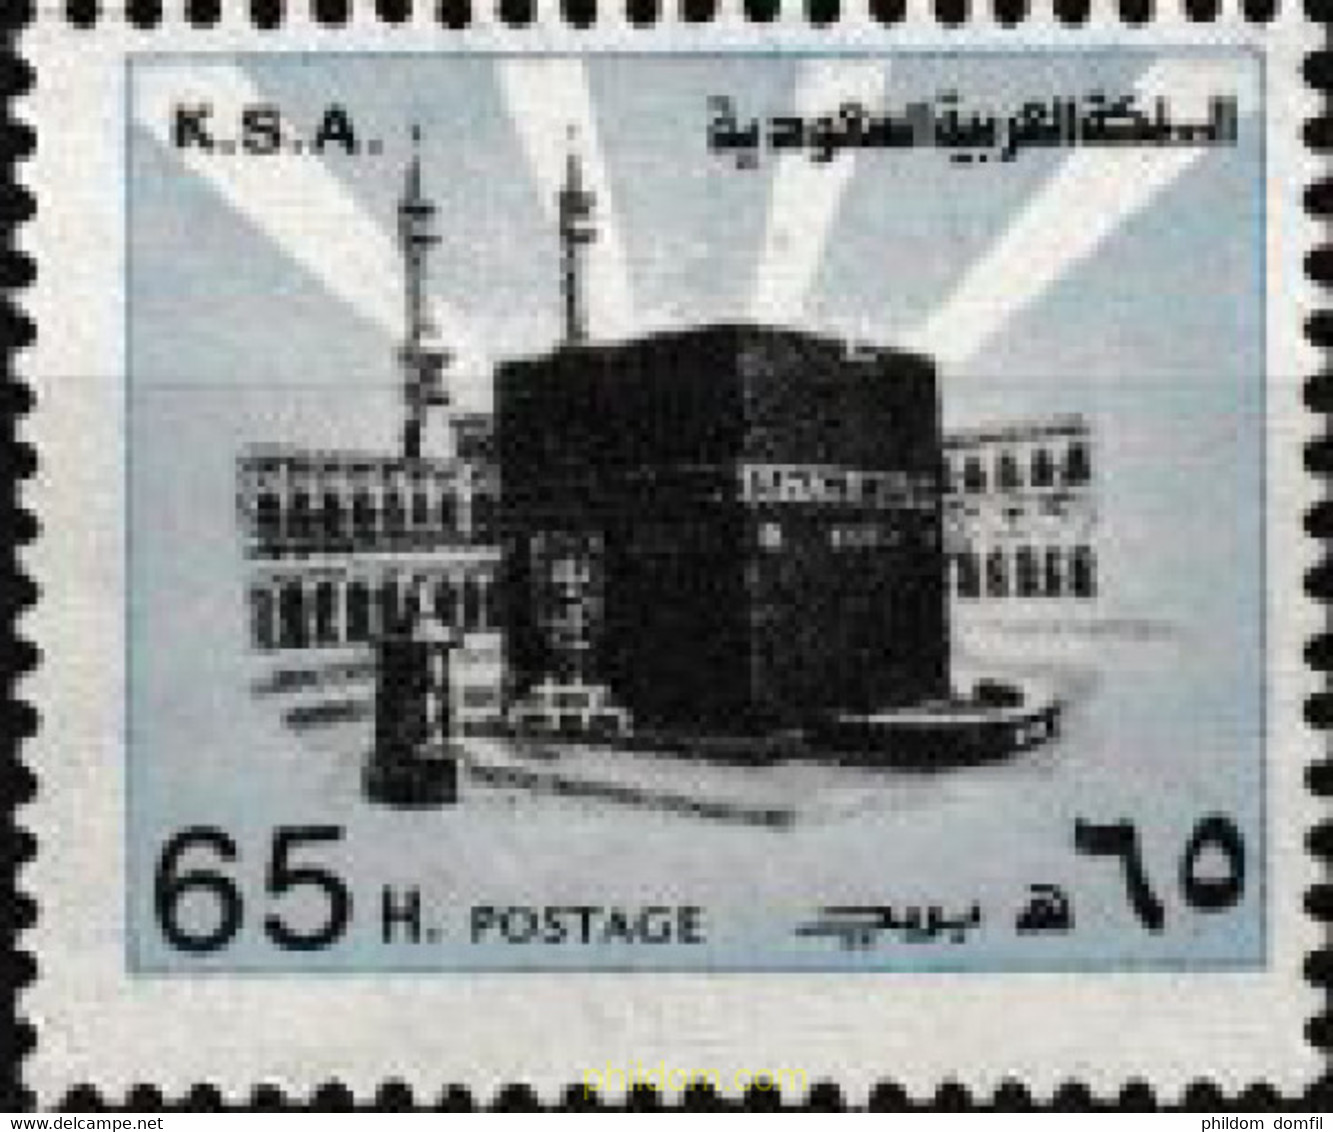 654867 MNH ARABIA SAUDITA 1982 LA SANTA KA'BA - Moschee E Sinagoghe